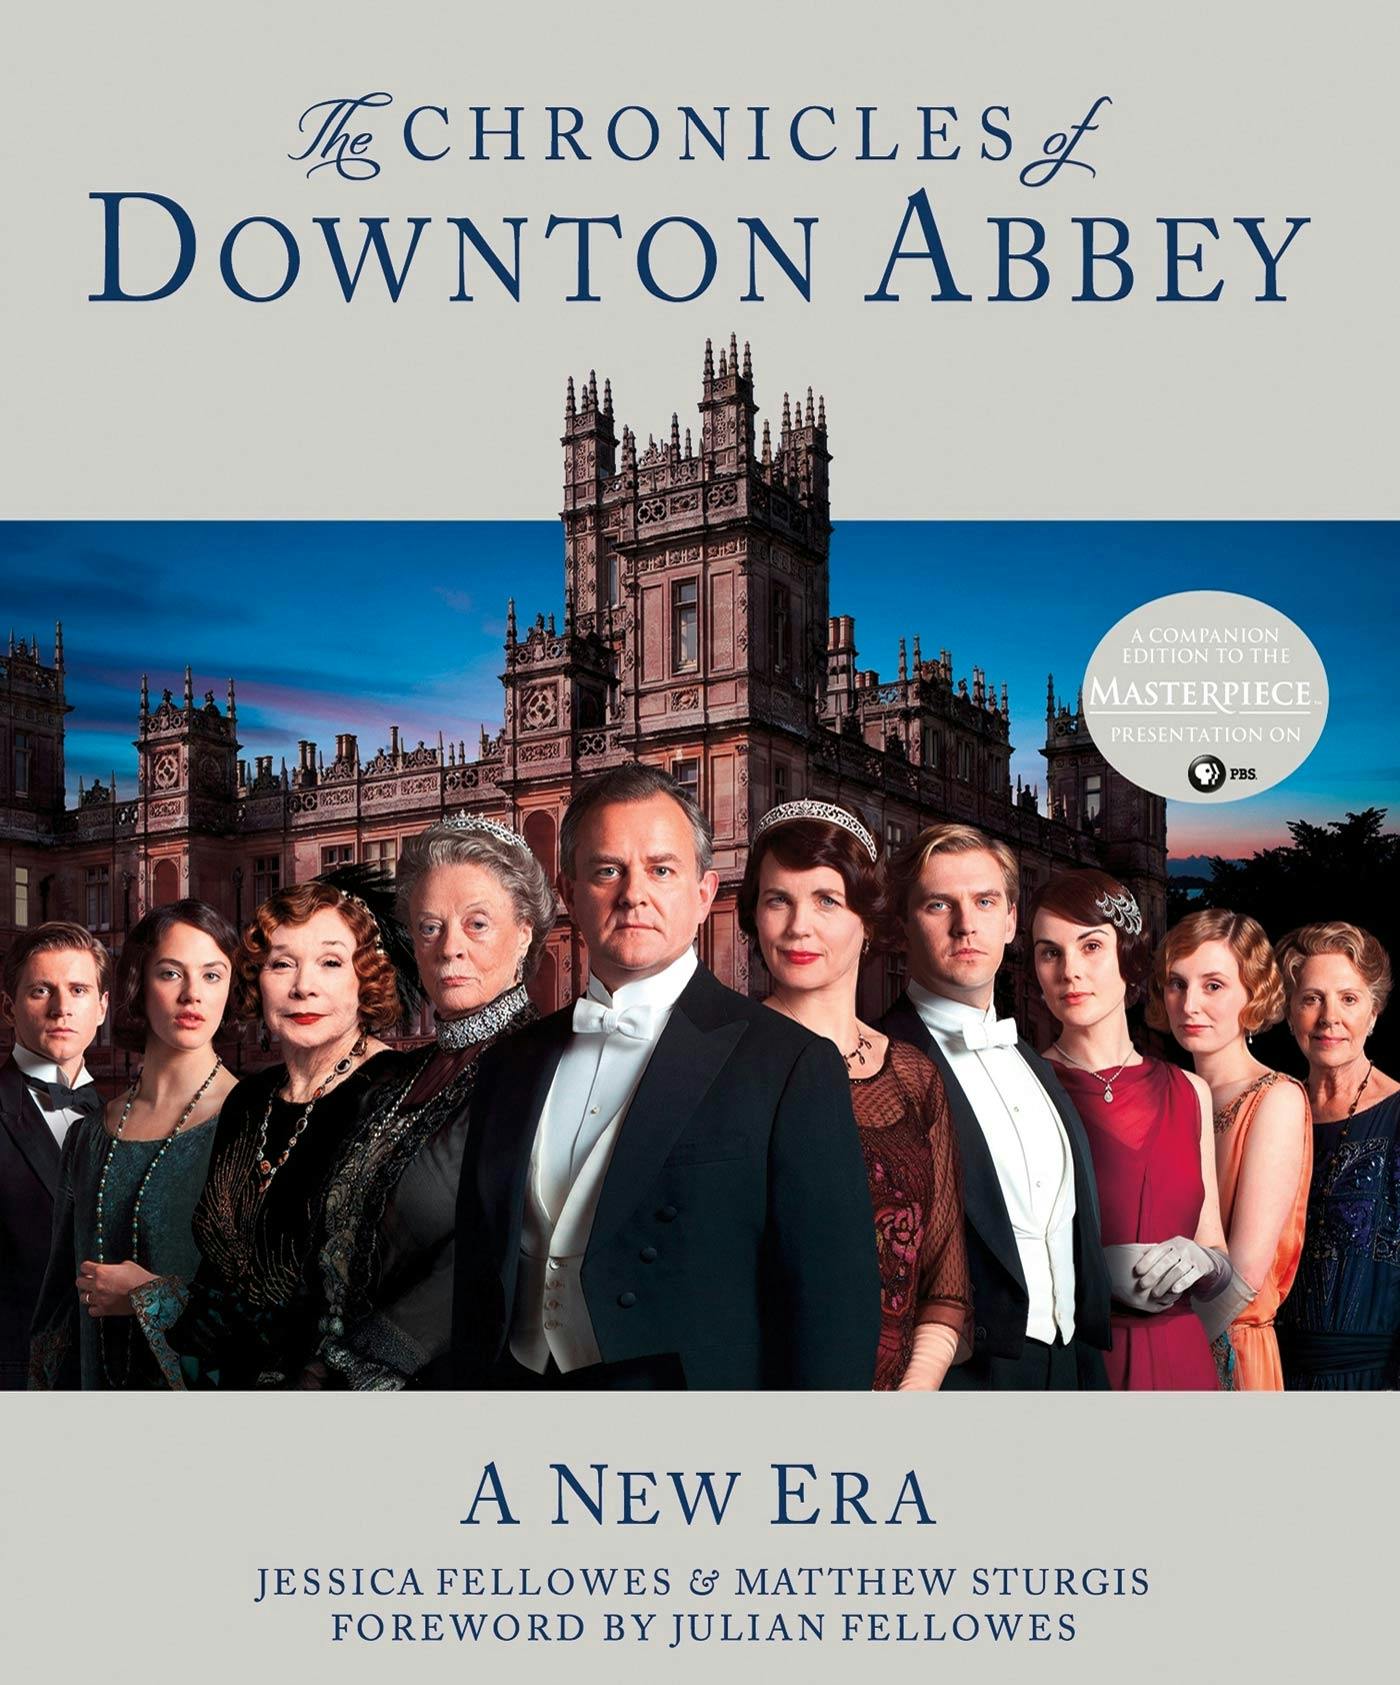 downton abbey family tree season 3